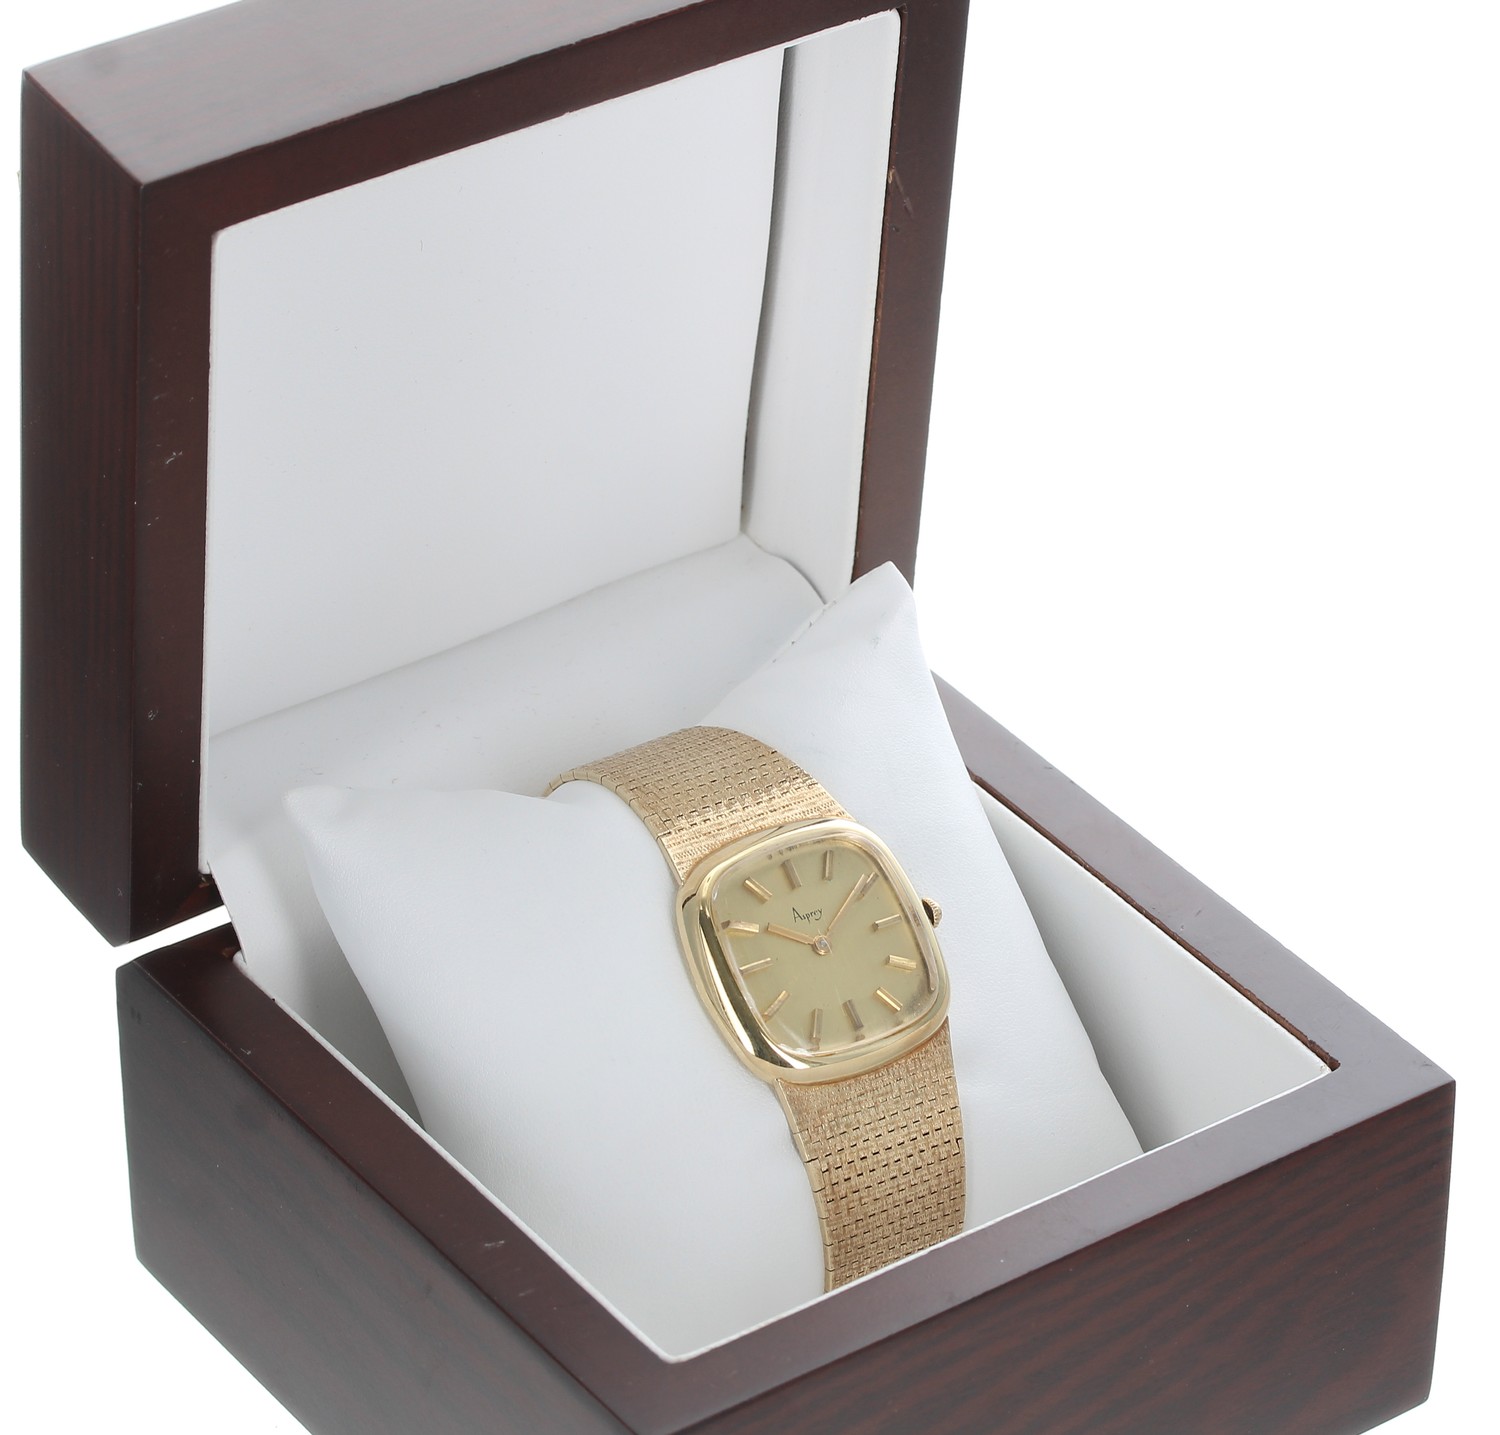 Asprey 9ct gentleman's bracelet wristwatch, import hallmarks for London 1974, signed champagne - Image 2 of 5